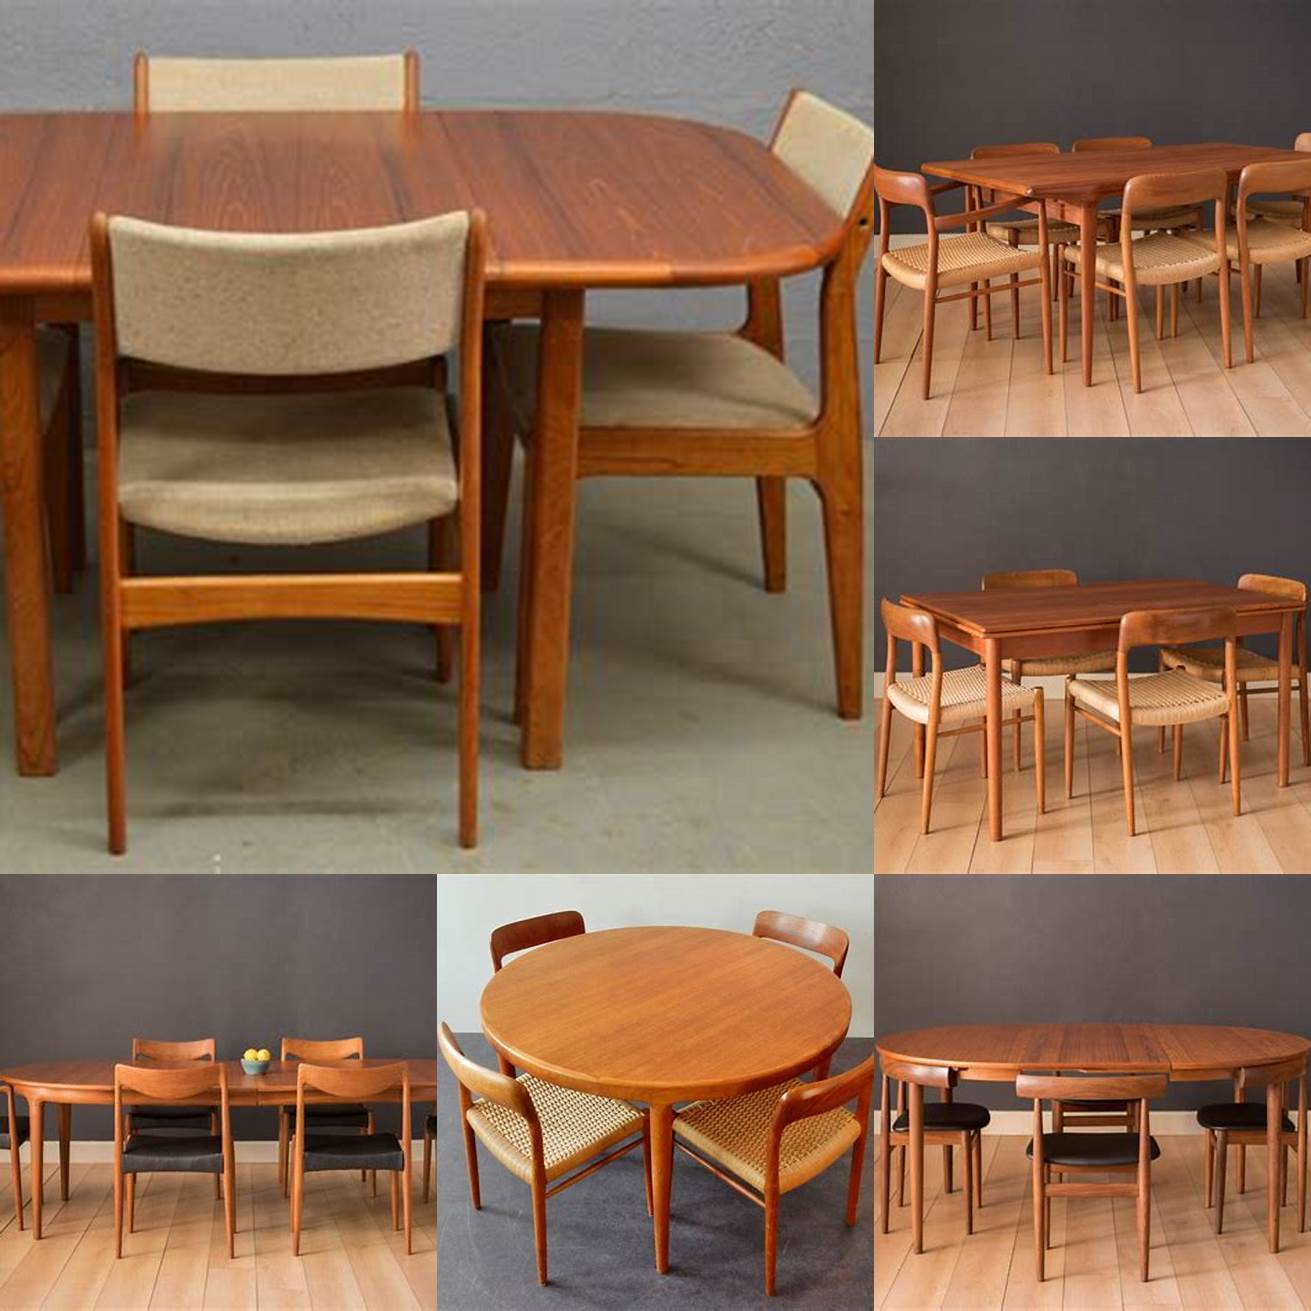 A Classic Danish Design Teak Dining Table